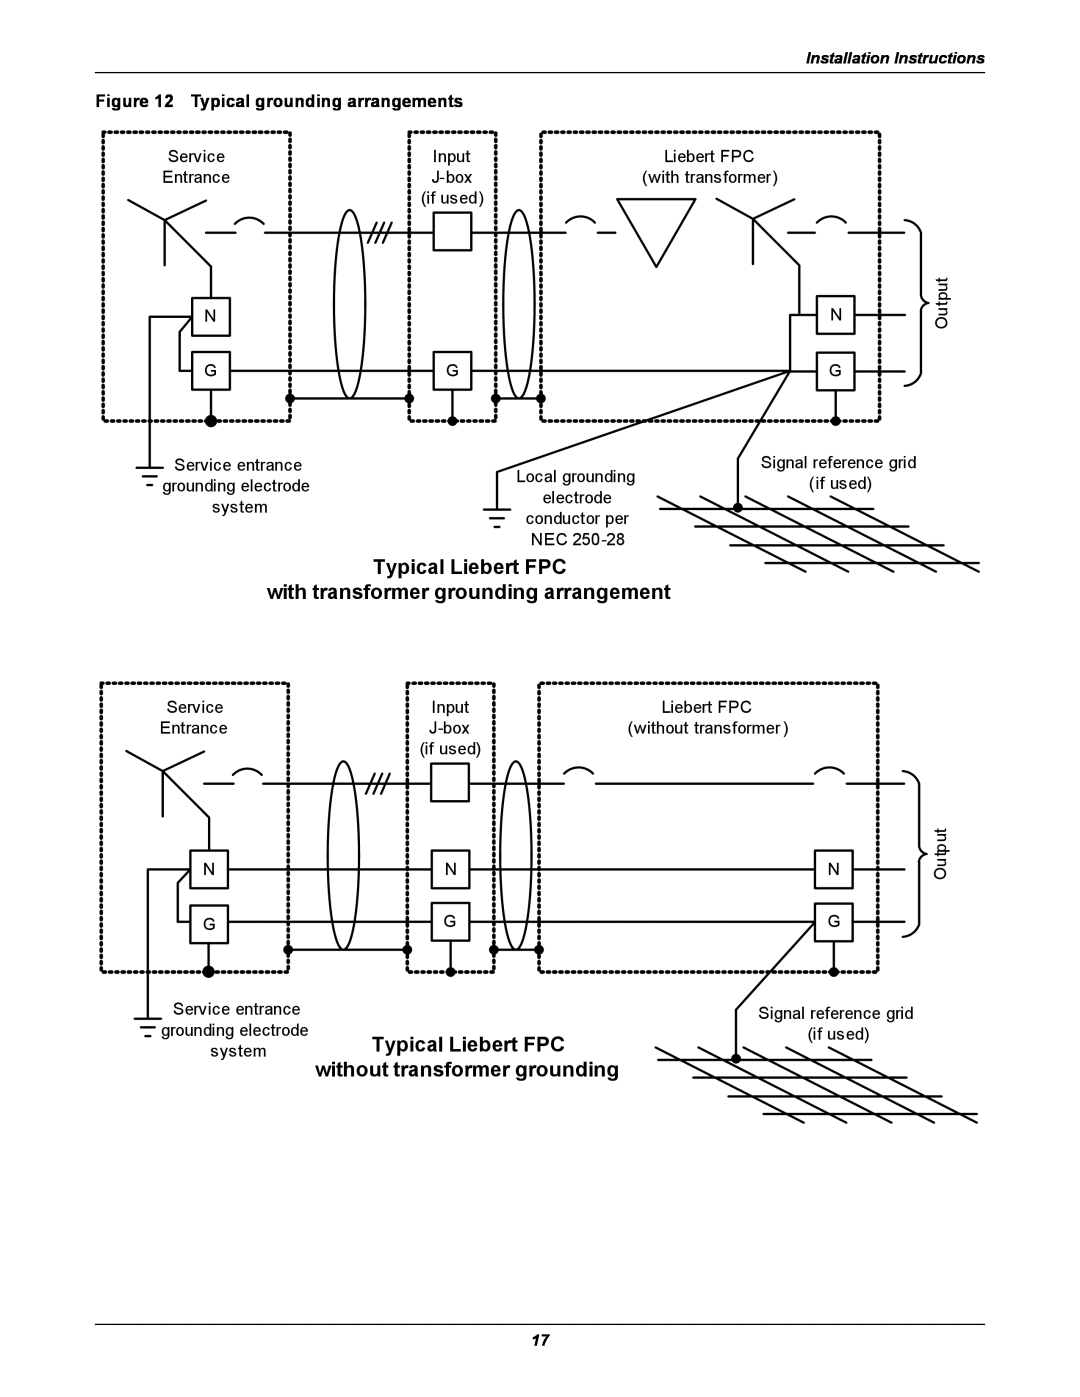 Emerson user manual Typical Liebert FPC with transformer grounding arrangement, Typical grounding arrangements 